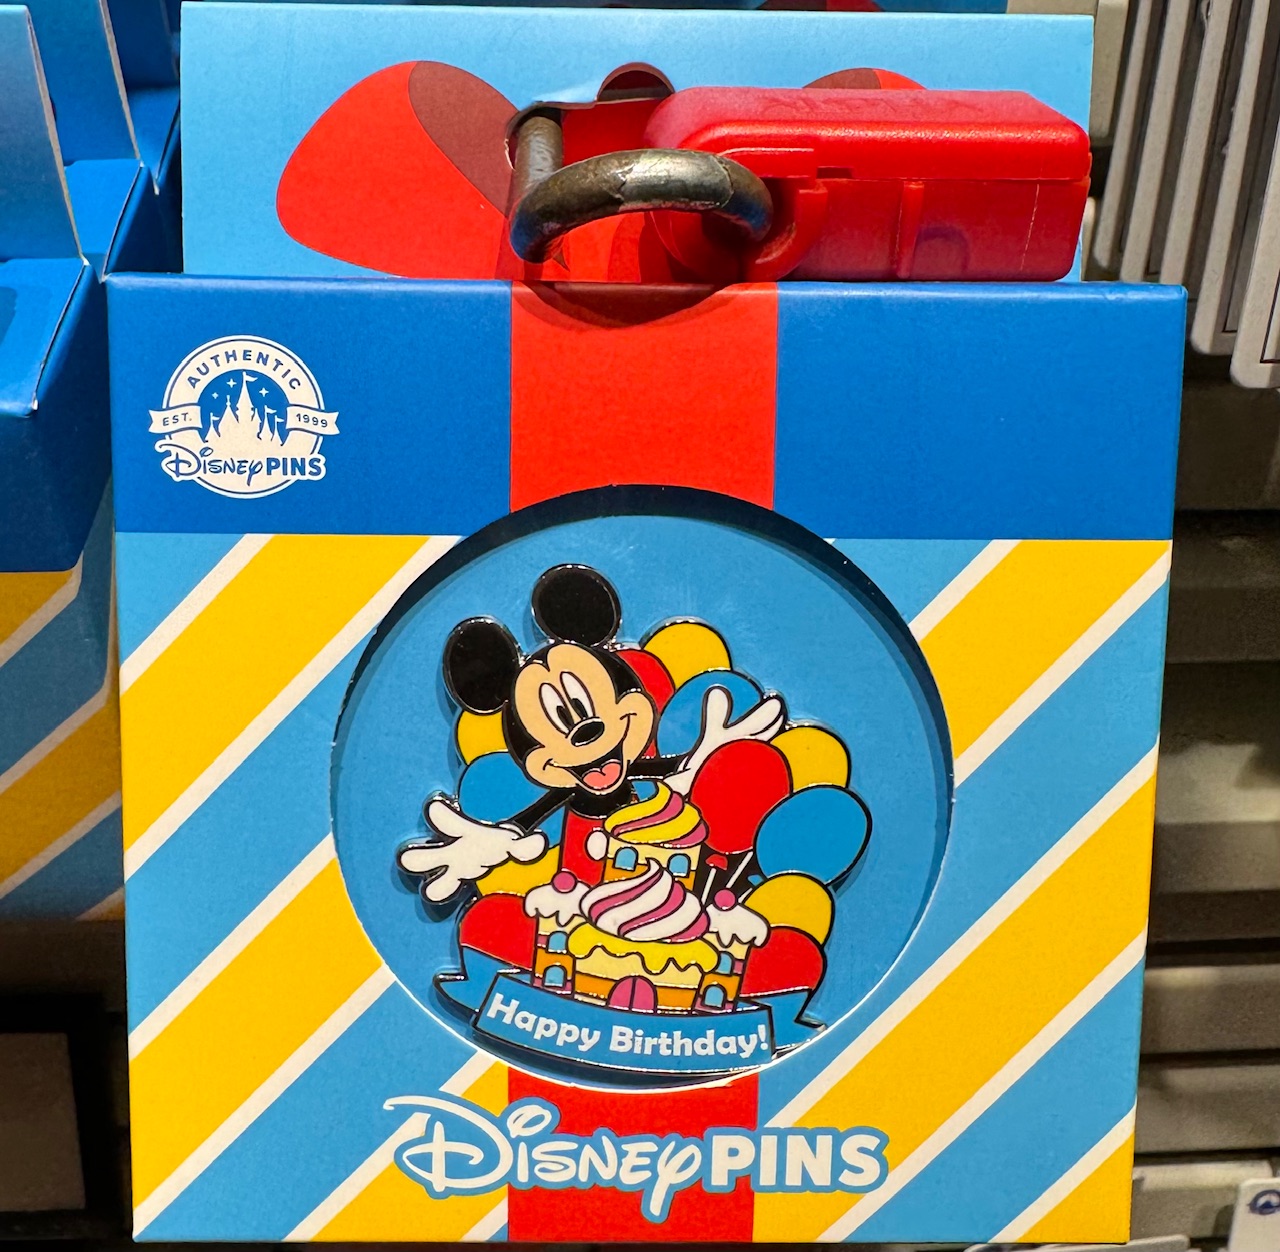 New Mickey Mouse Happy Birthday Pin at Disney Parks - Disney Pins Blog